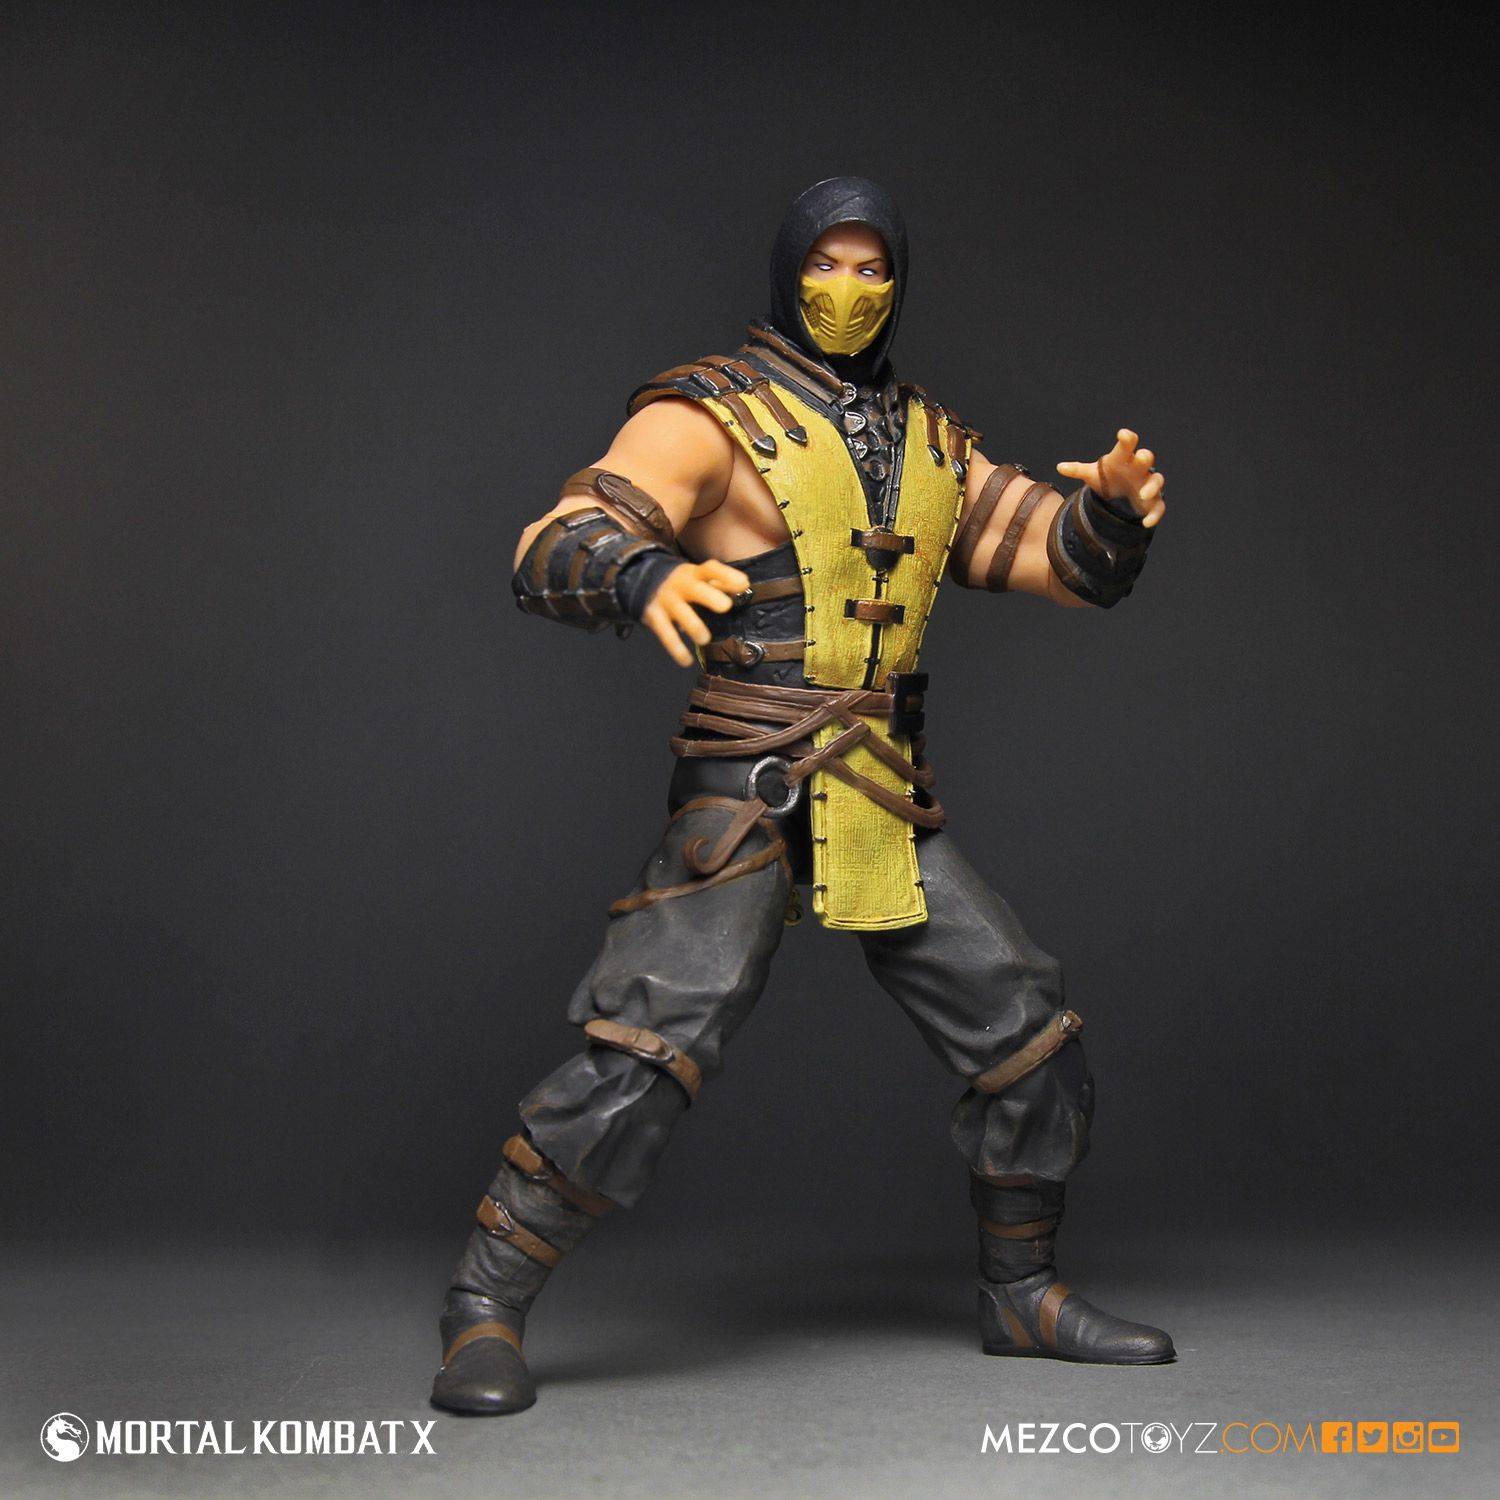 Мортал комбат покупки. Mortal Kombat x Scorpion фигурка. Игрушки Mortal Kombat Mezco. Фигурка Скорпион Mortal Kombat. Скорпион мортал комбат.